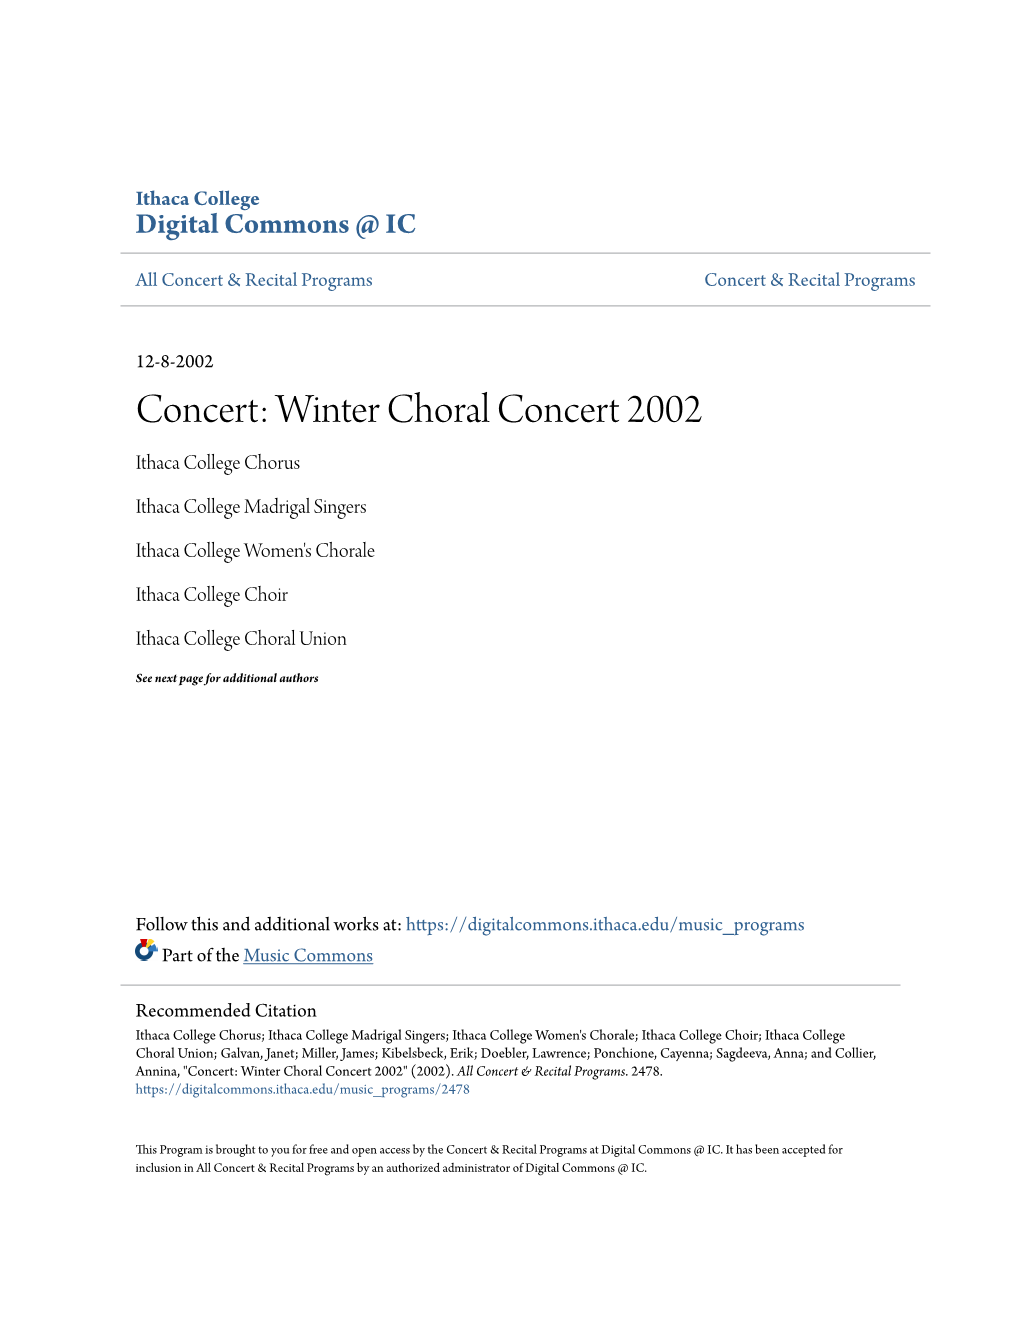 Winter Choral Concert 2002 Ithaca College Chorus